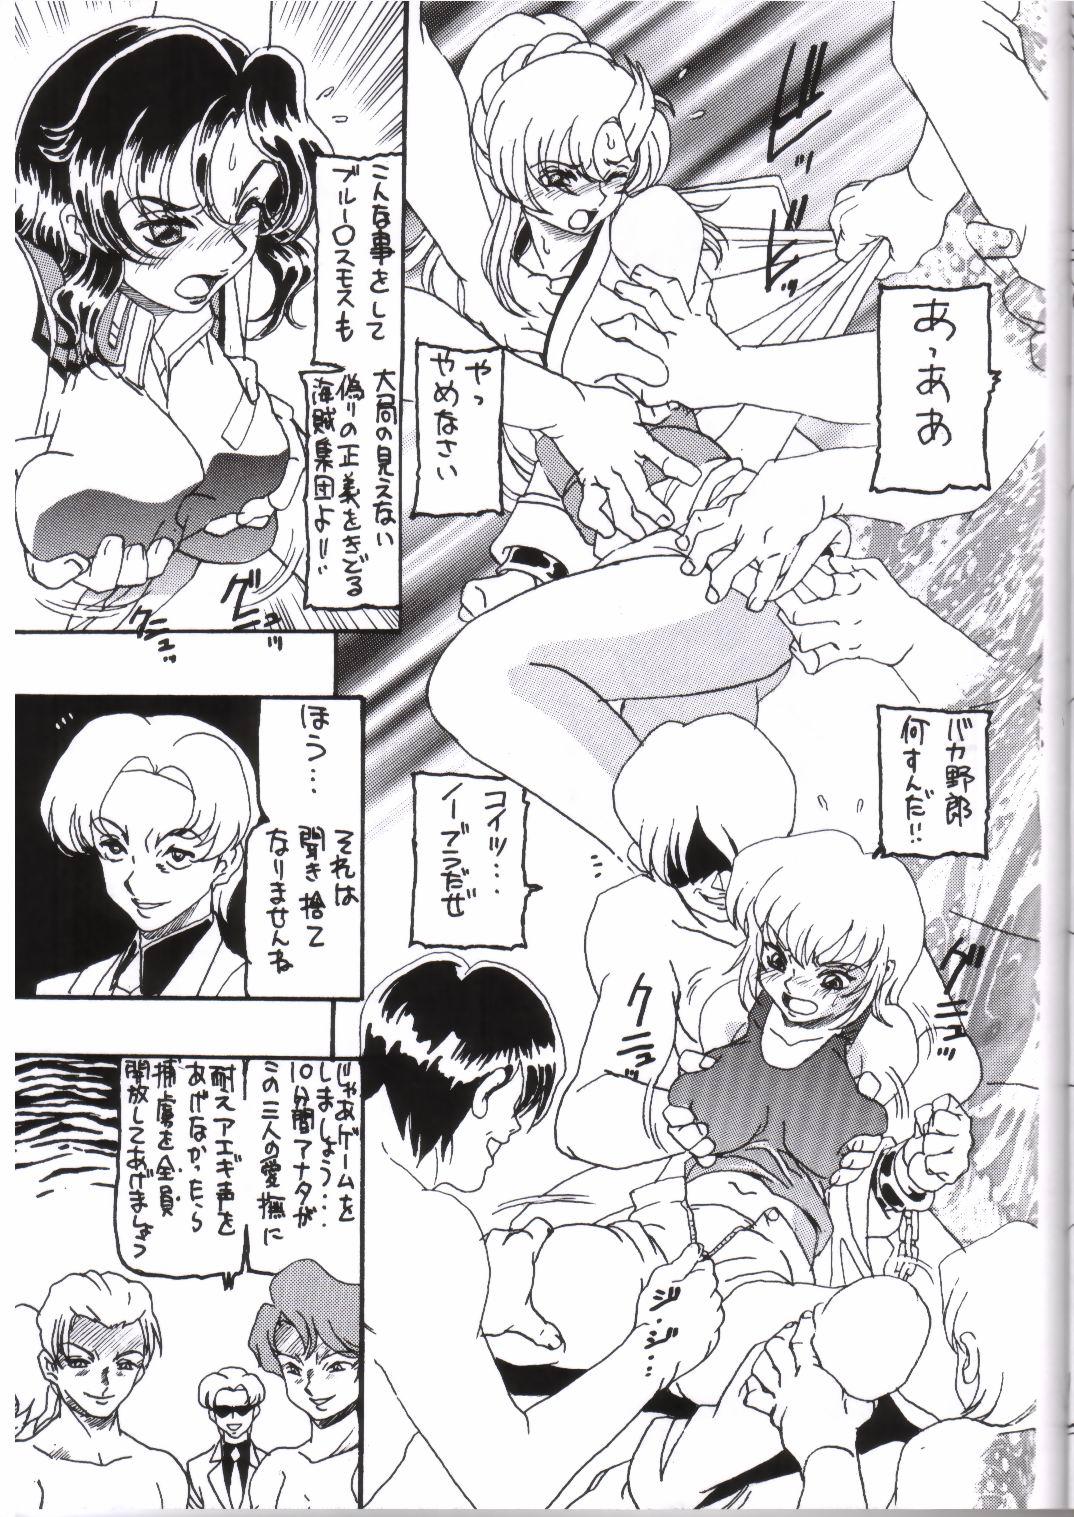 Reverse Moon Shine 9 - Gundam seed Teens - Page 8